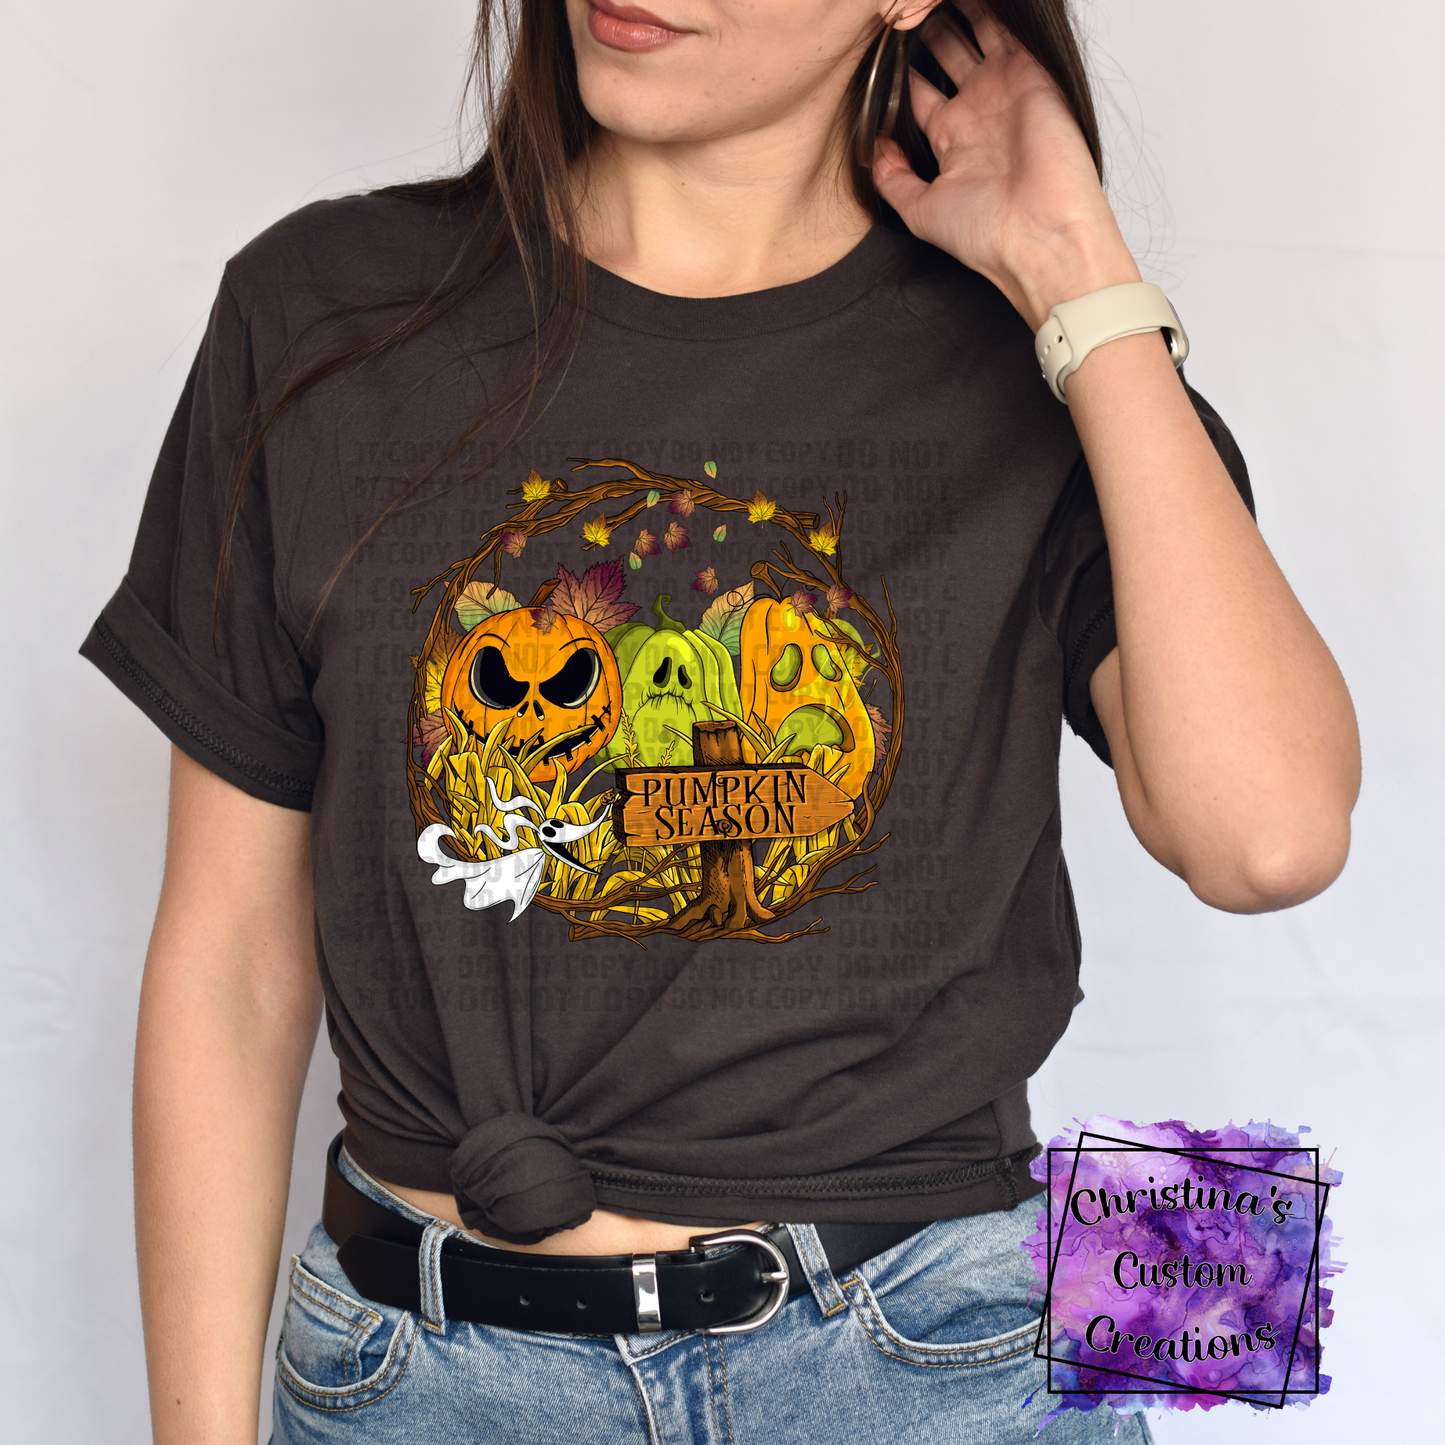 Pumpkin Season T-Shirt | Trendy Halloween/Fall Shirt | Fast Shipping | Super Soft Shirts for Men/Women/Kid's